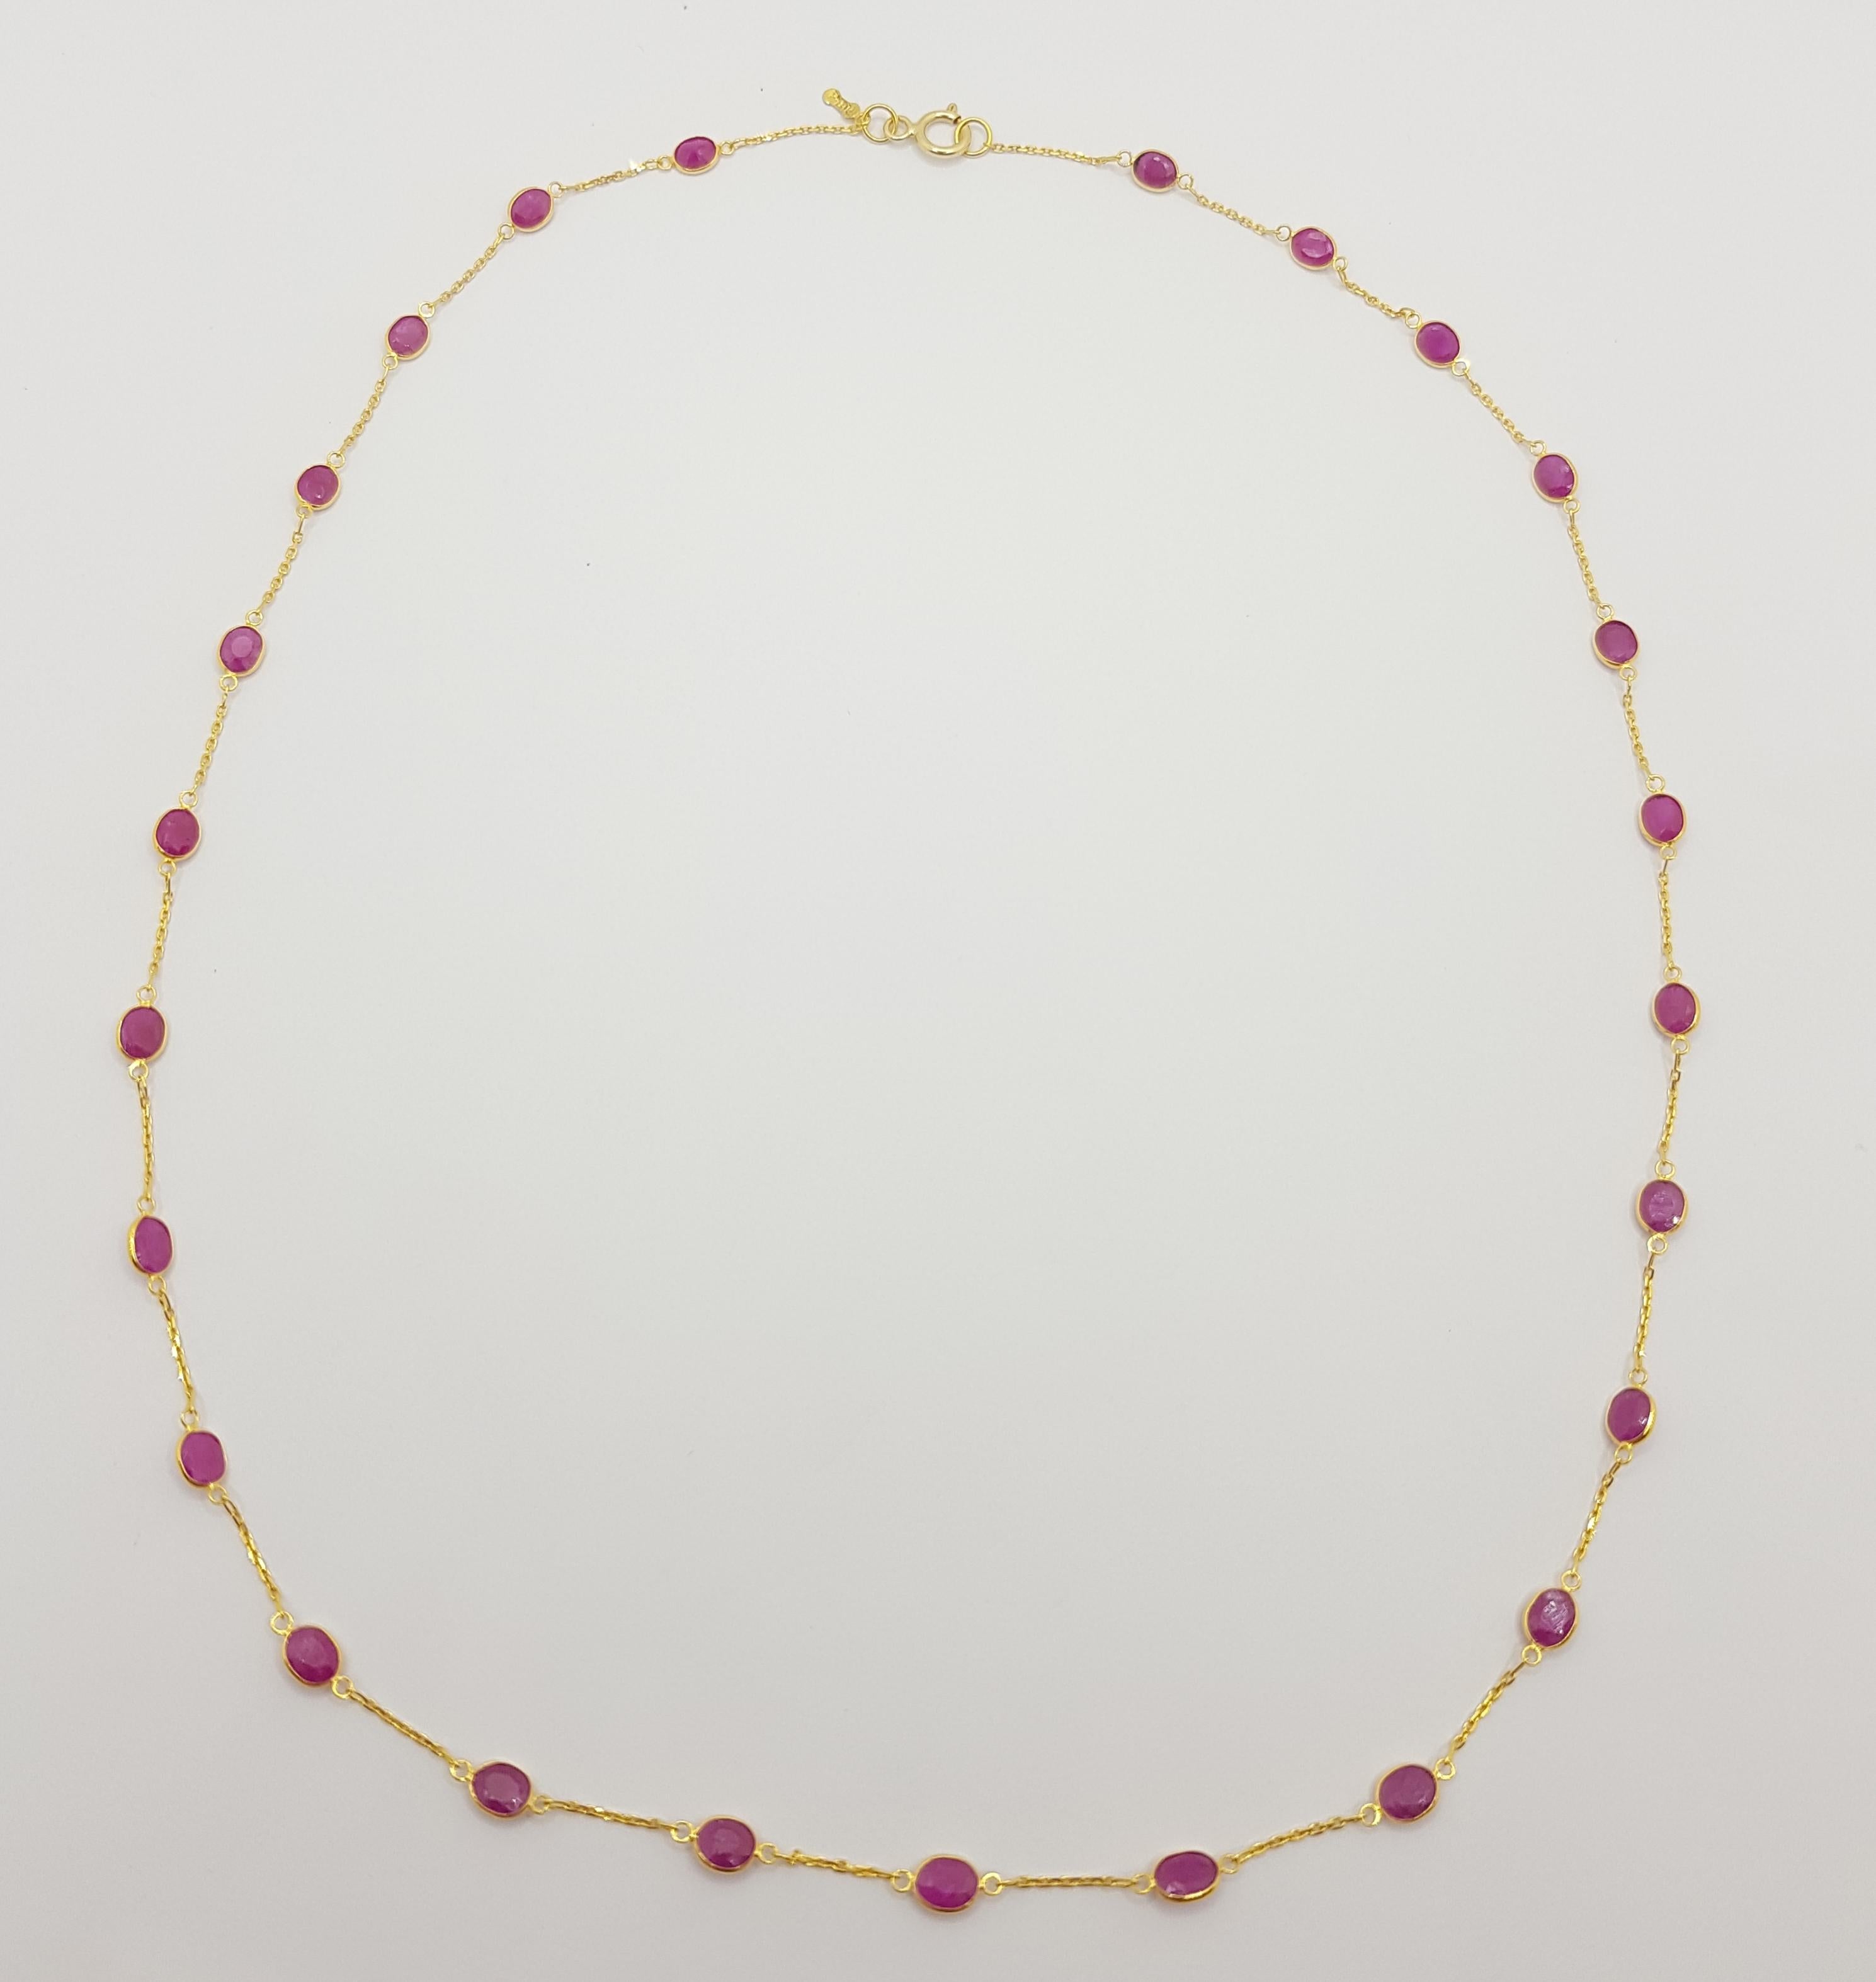 Oval Cut Ruby Necklace Set in 18 Karat Gold Settings